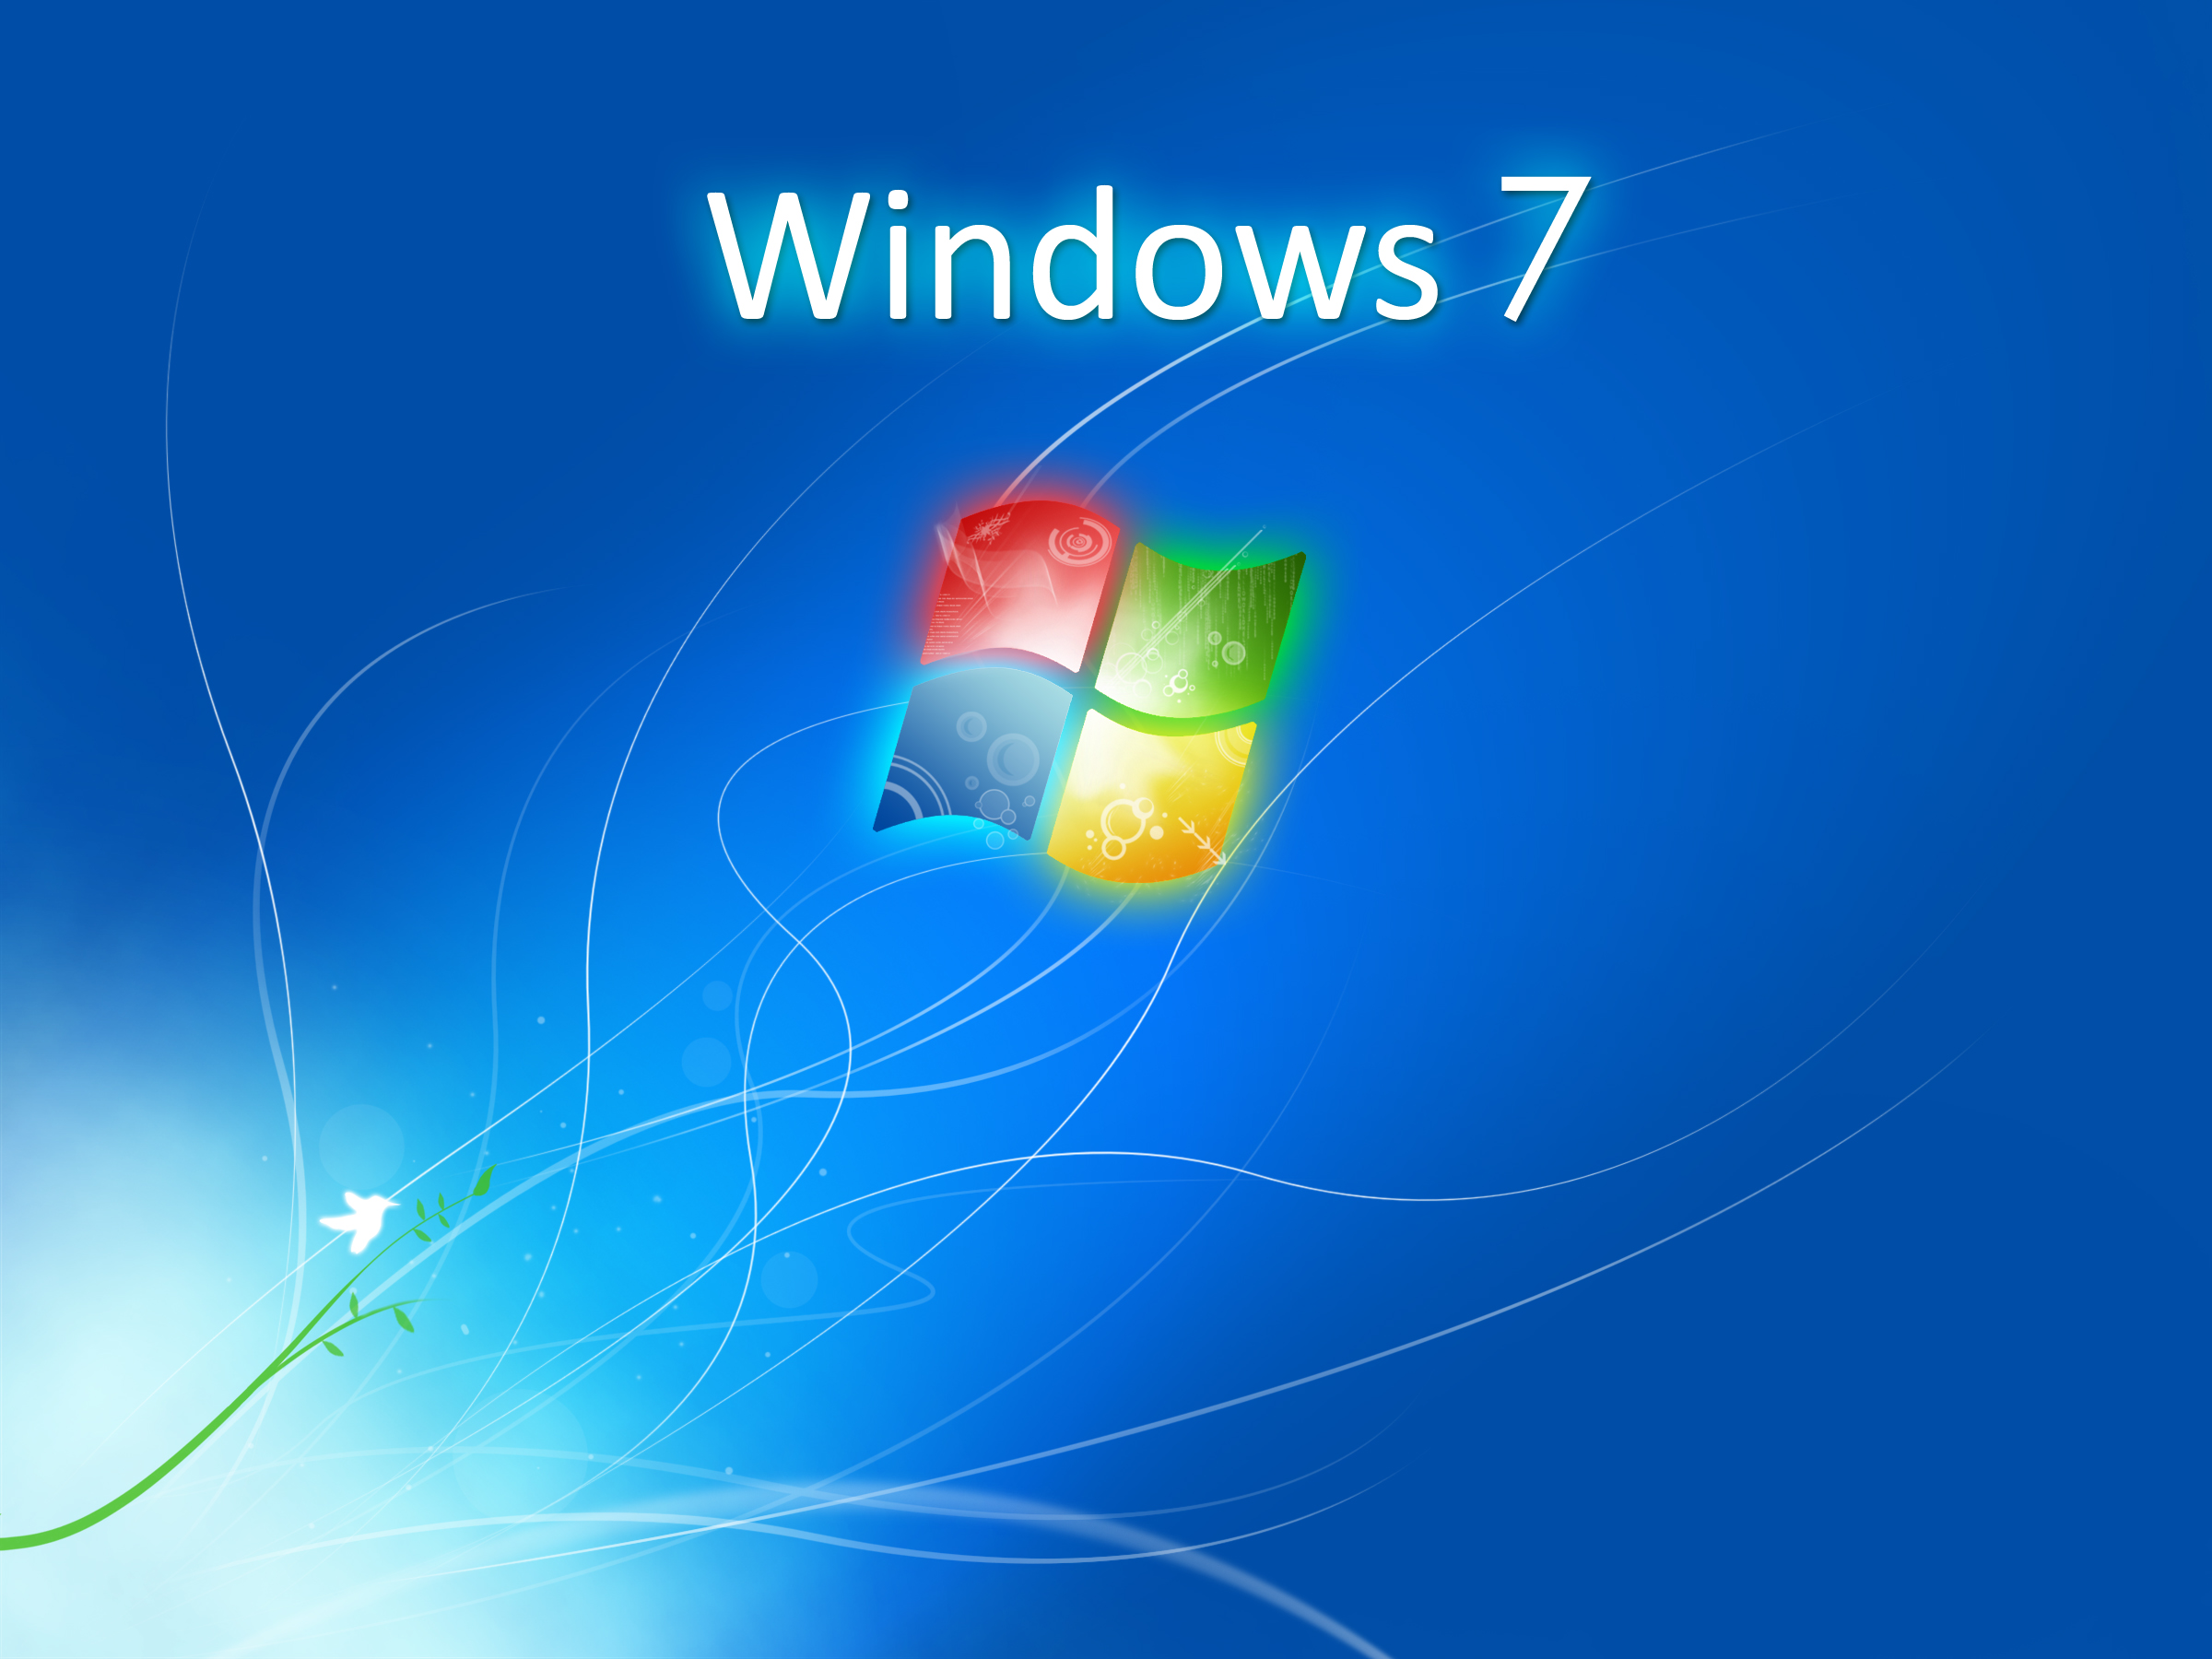 Windows 7 (logo) Wallpaper - WindowsCenter.nl